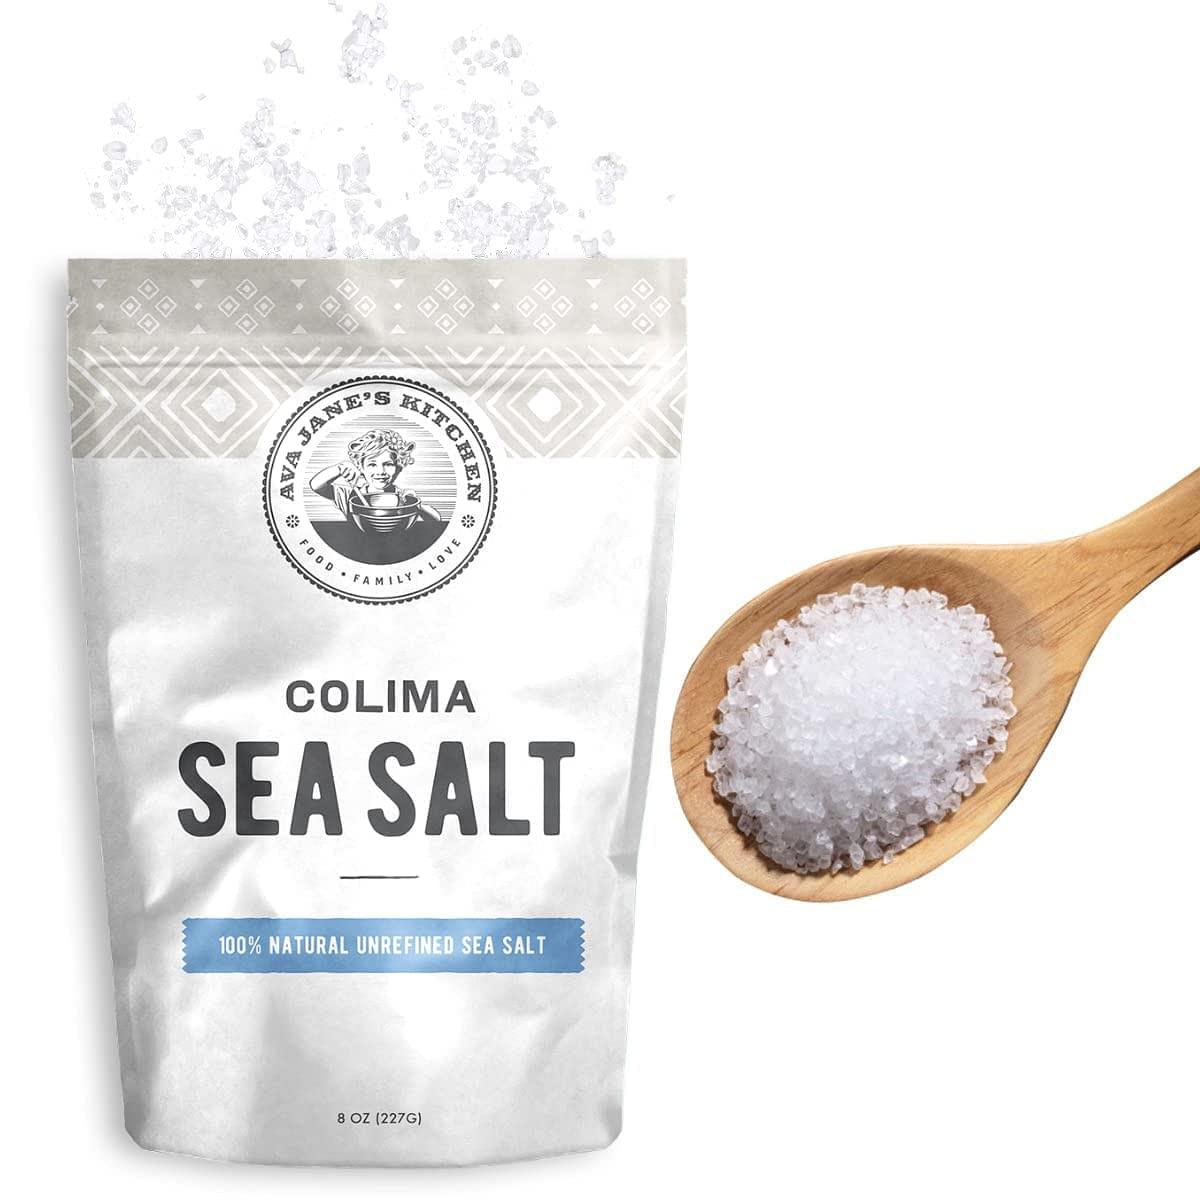 AVA JANE'S KITCHEN - Colima Sea Salt Unrefined Hand Harvested - 100% all Natural Organic Sea Salt, Gourmet Grade, Coarse Grain, Non GMO's Kosher Salt, 8oz